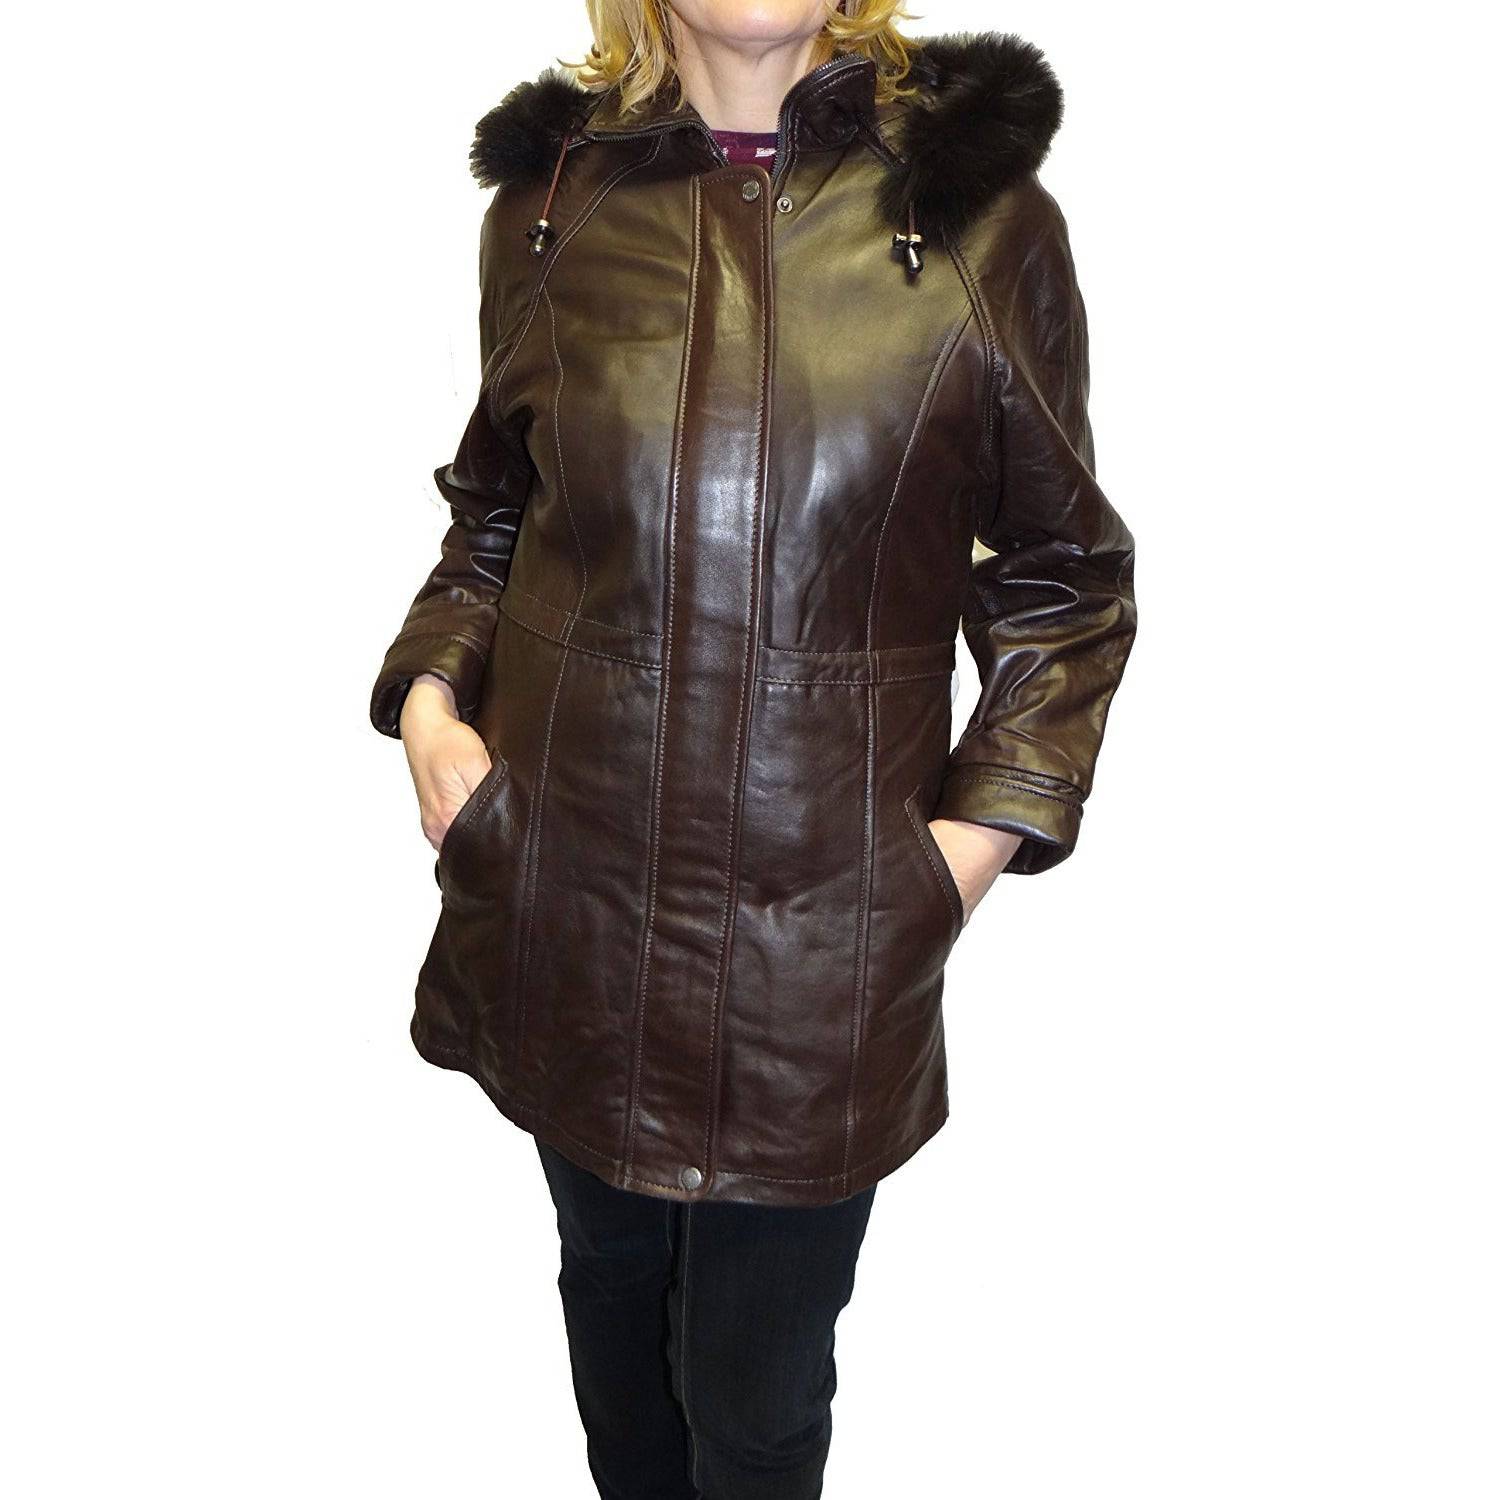 Knoles&Carter Women's Fox Fur Hooded Leather Jacket